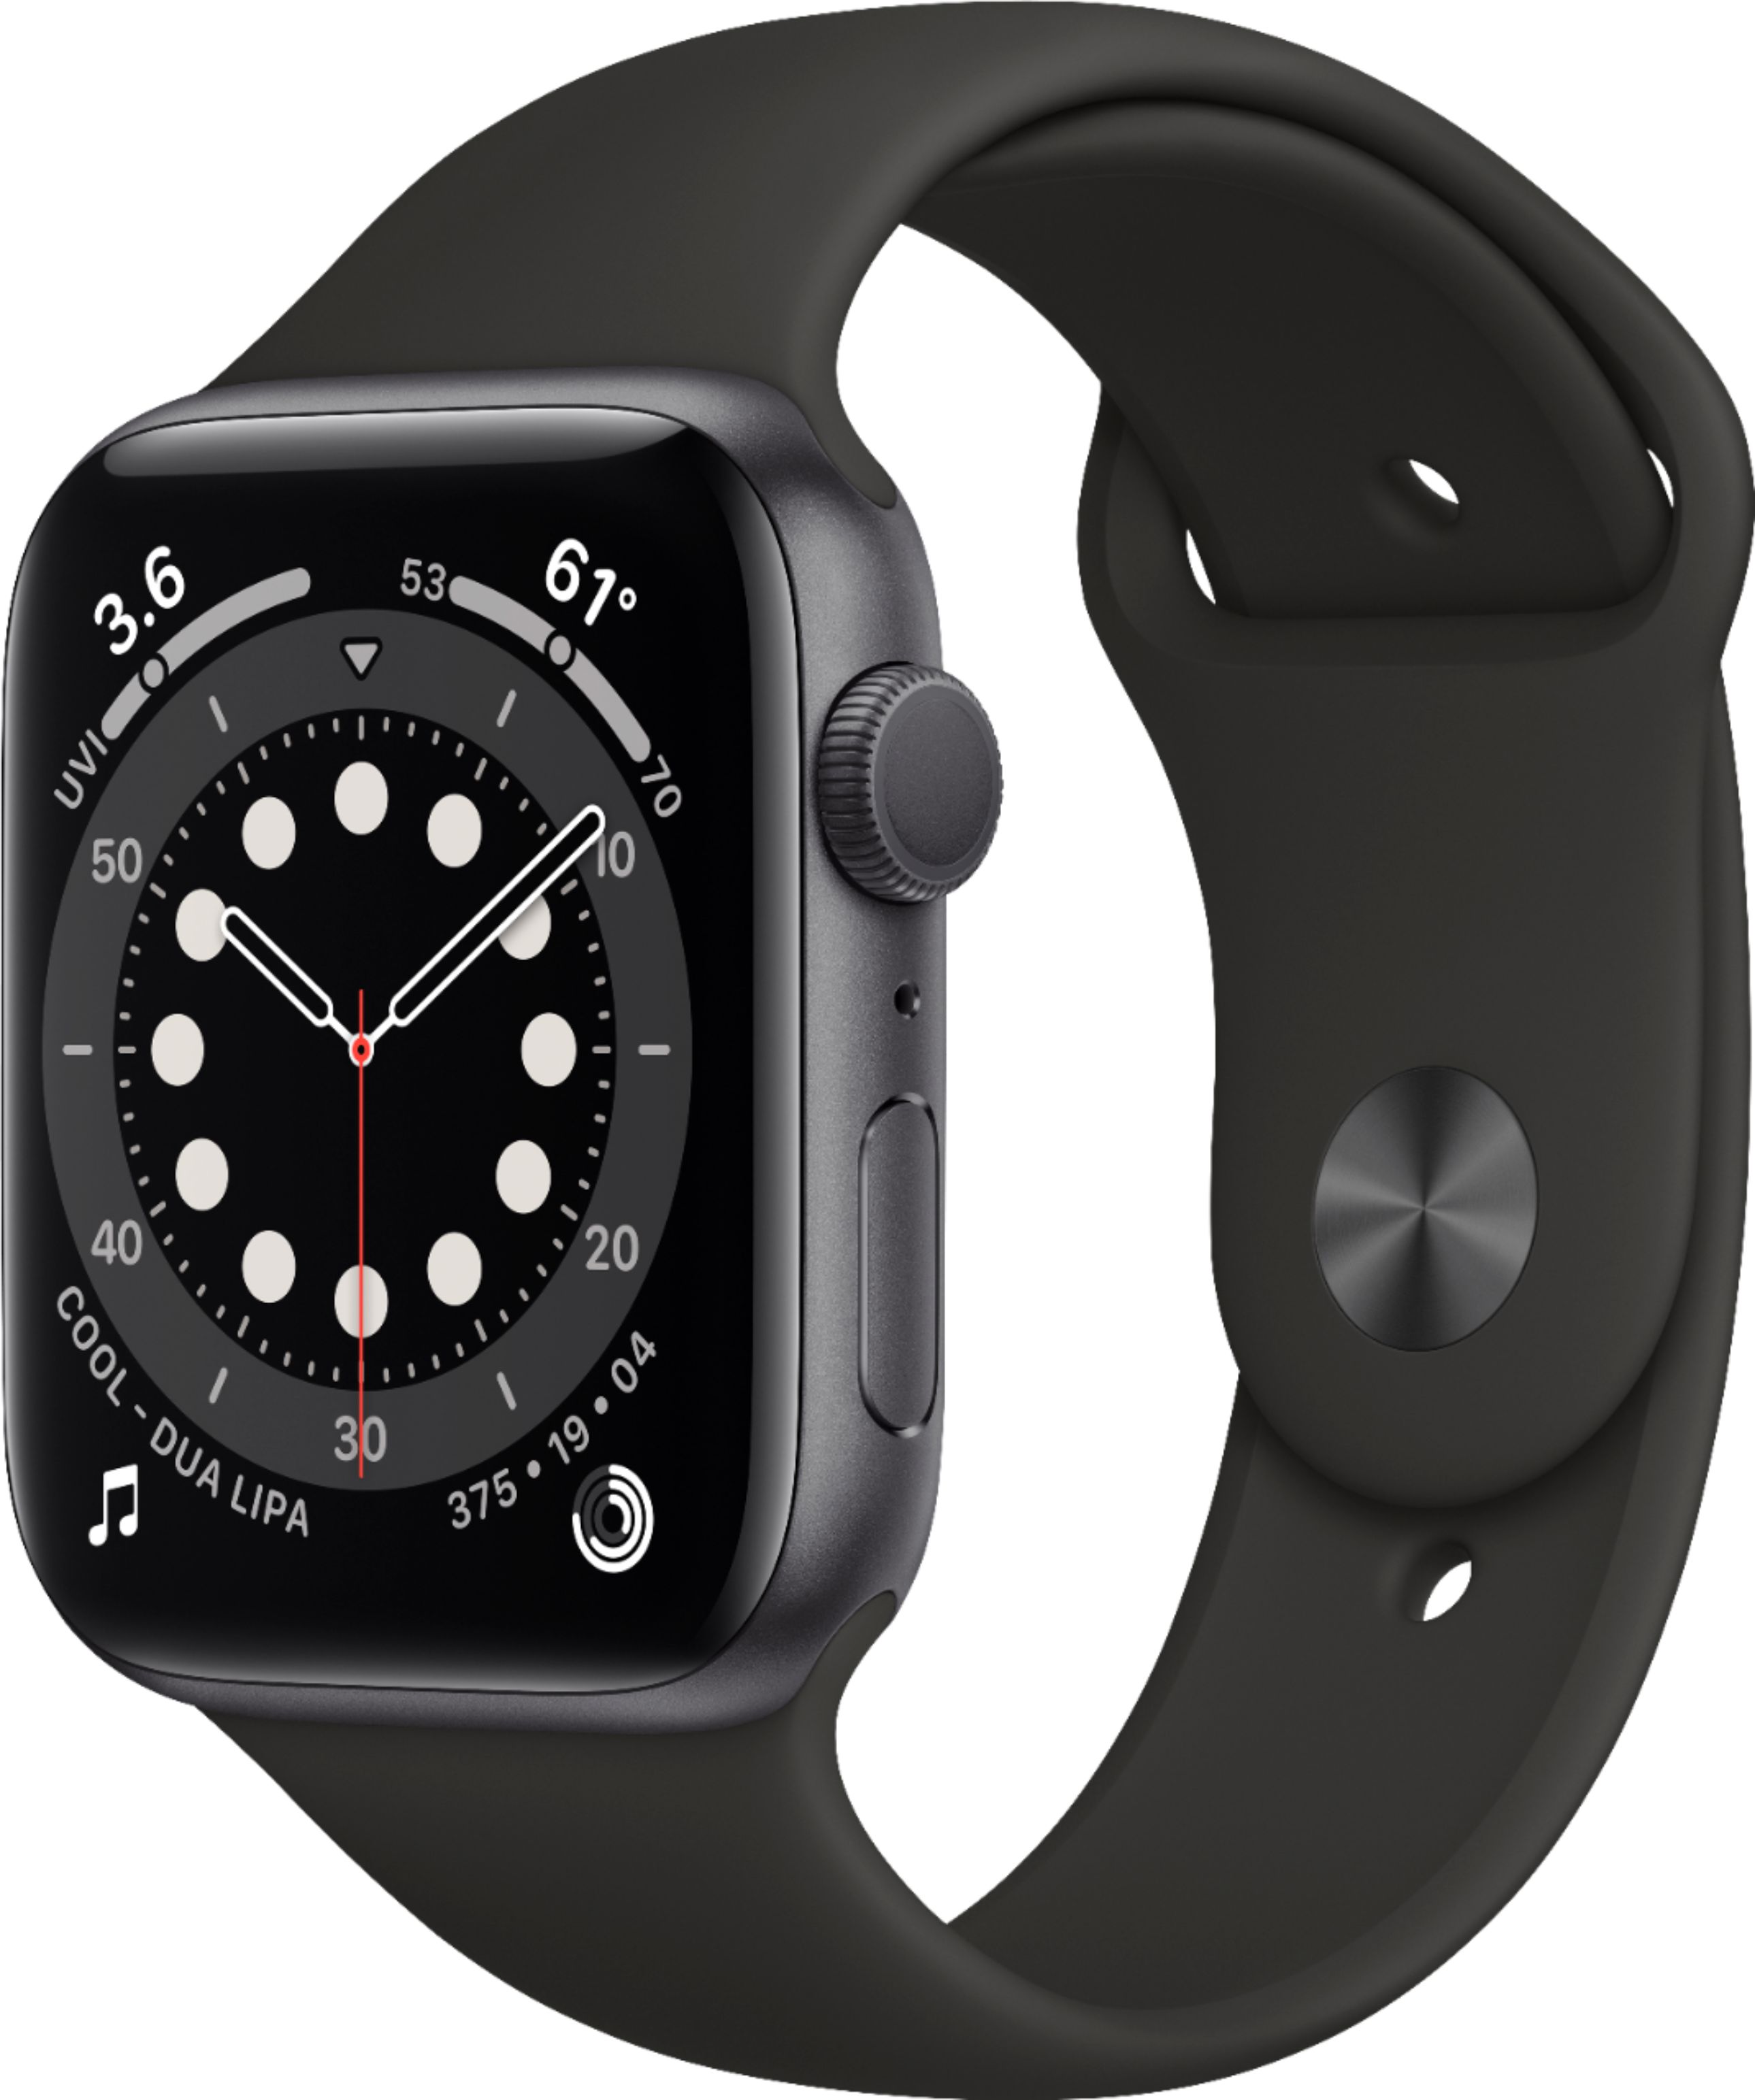 Apple Watch Series 6 (GPS) 44mm Space Gray Aluminum - Best Buy